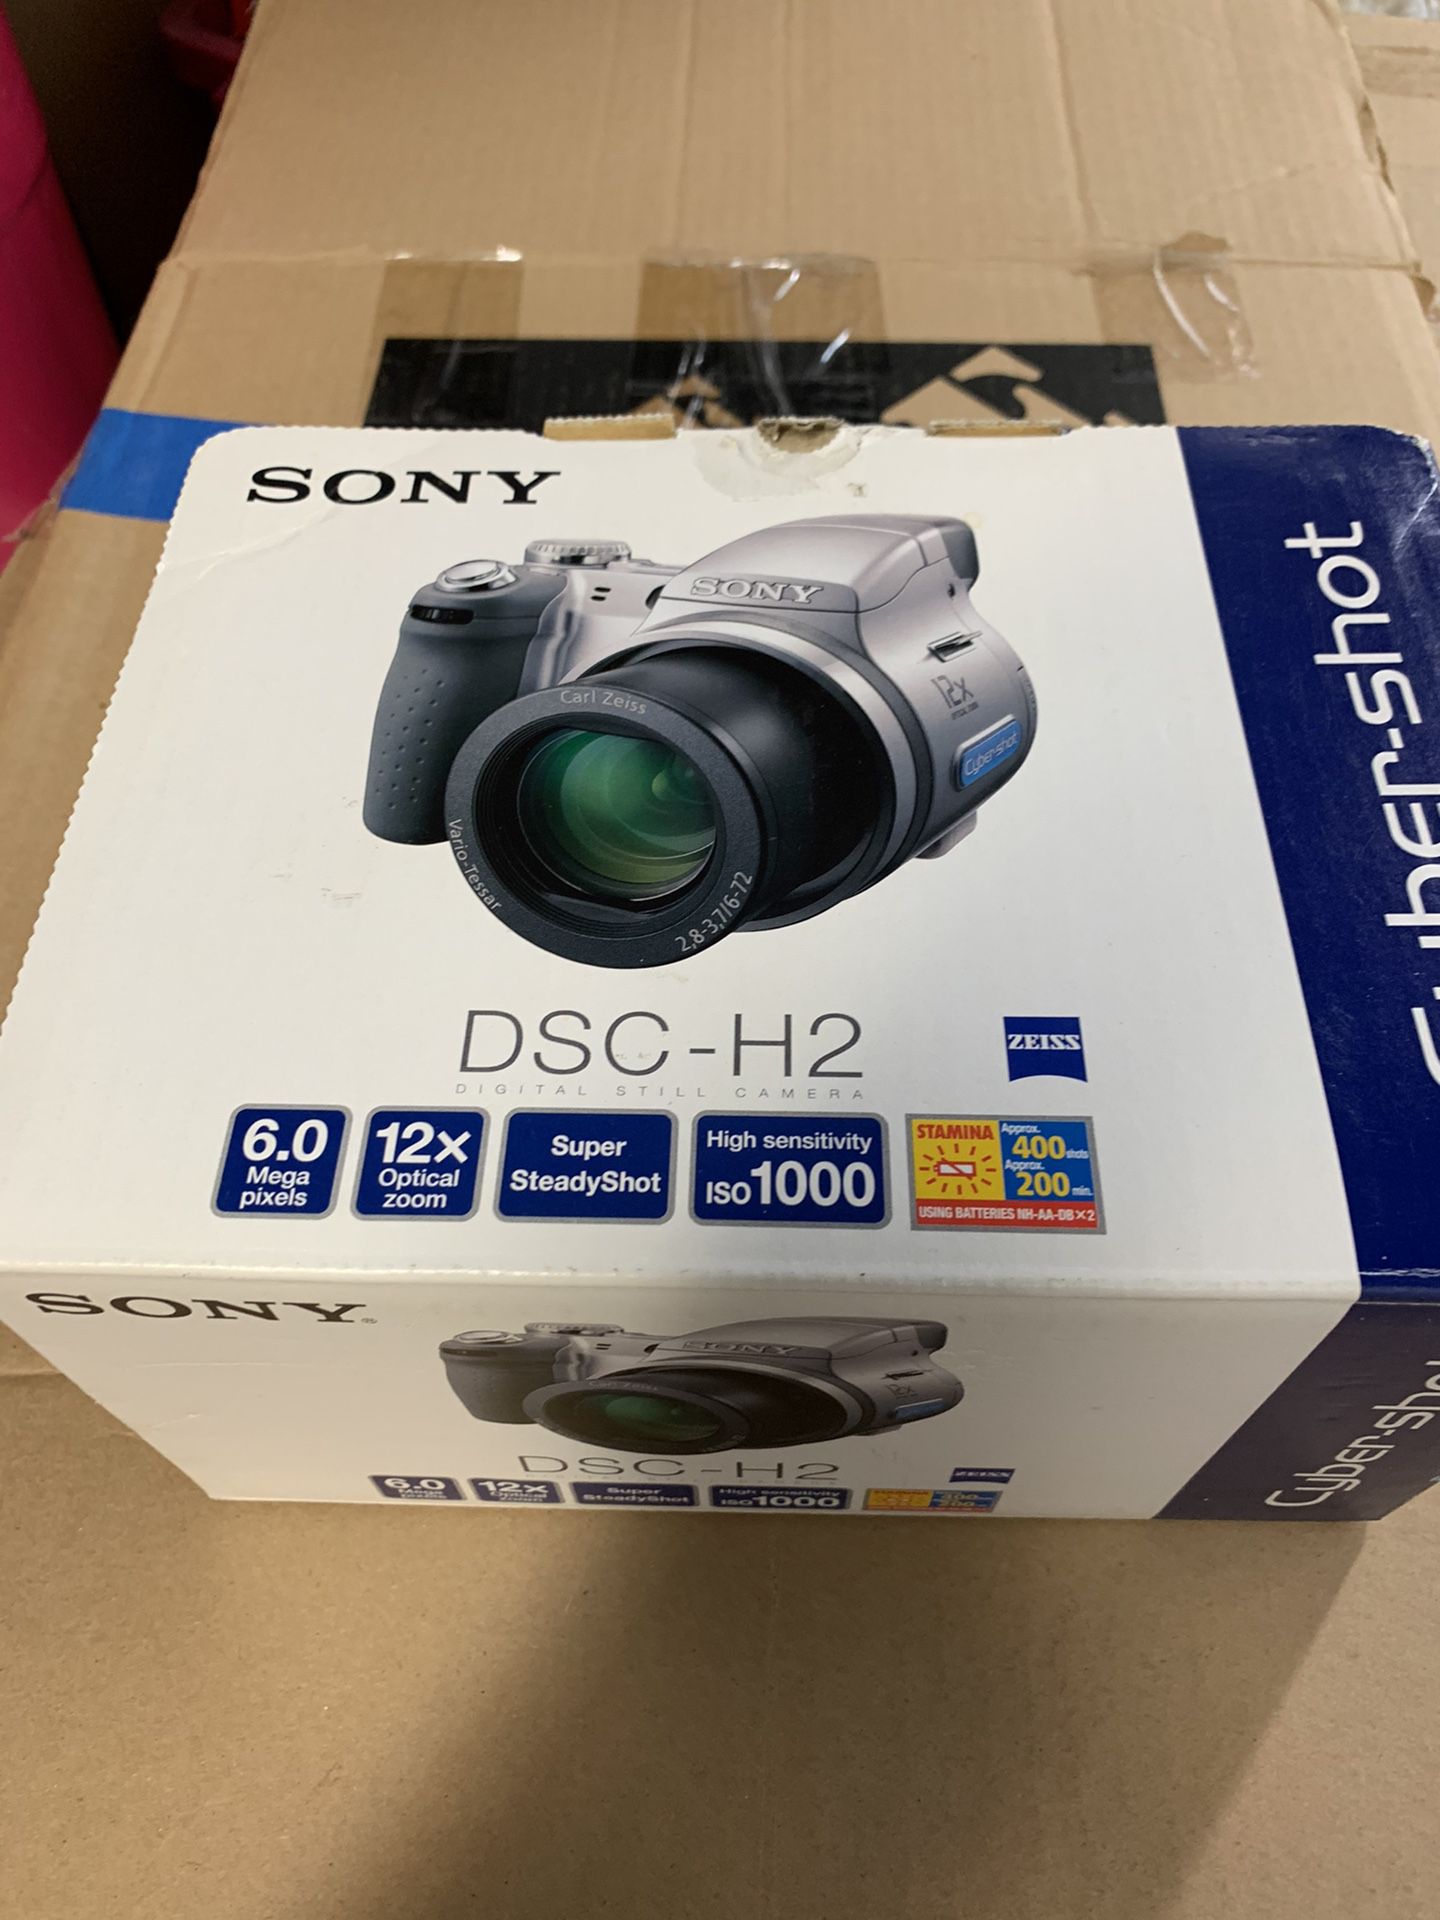 Sony Cyber-Shot Camera DSC-H2. 6.0 MP Digital Camera